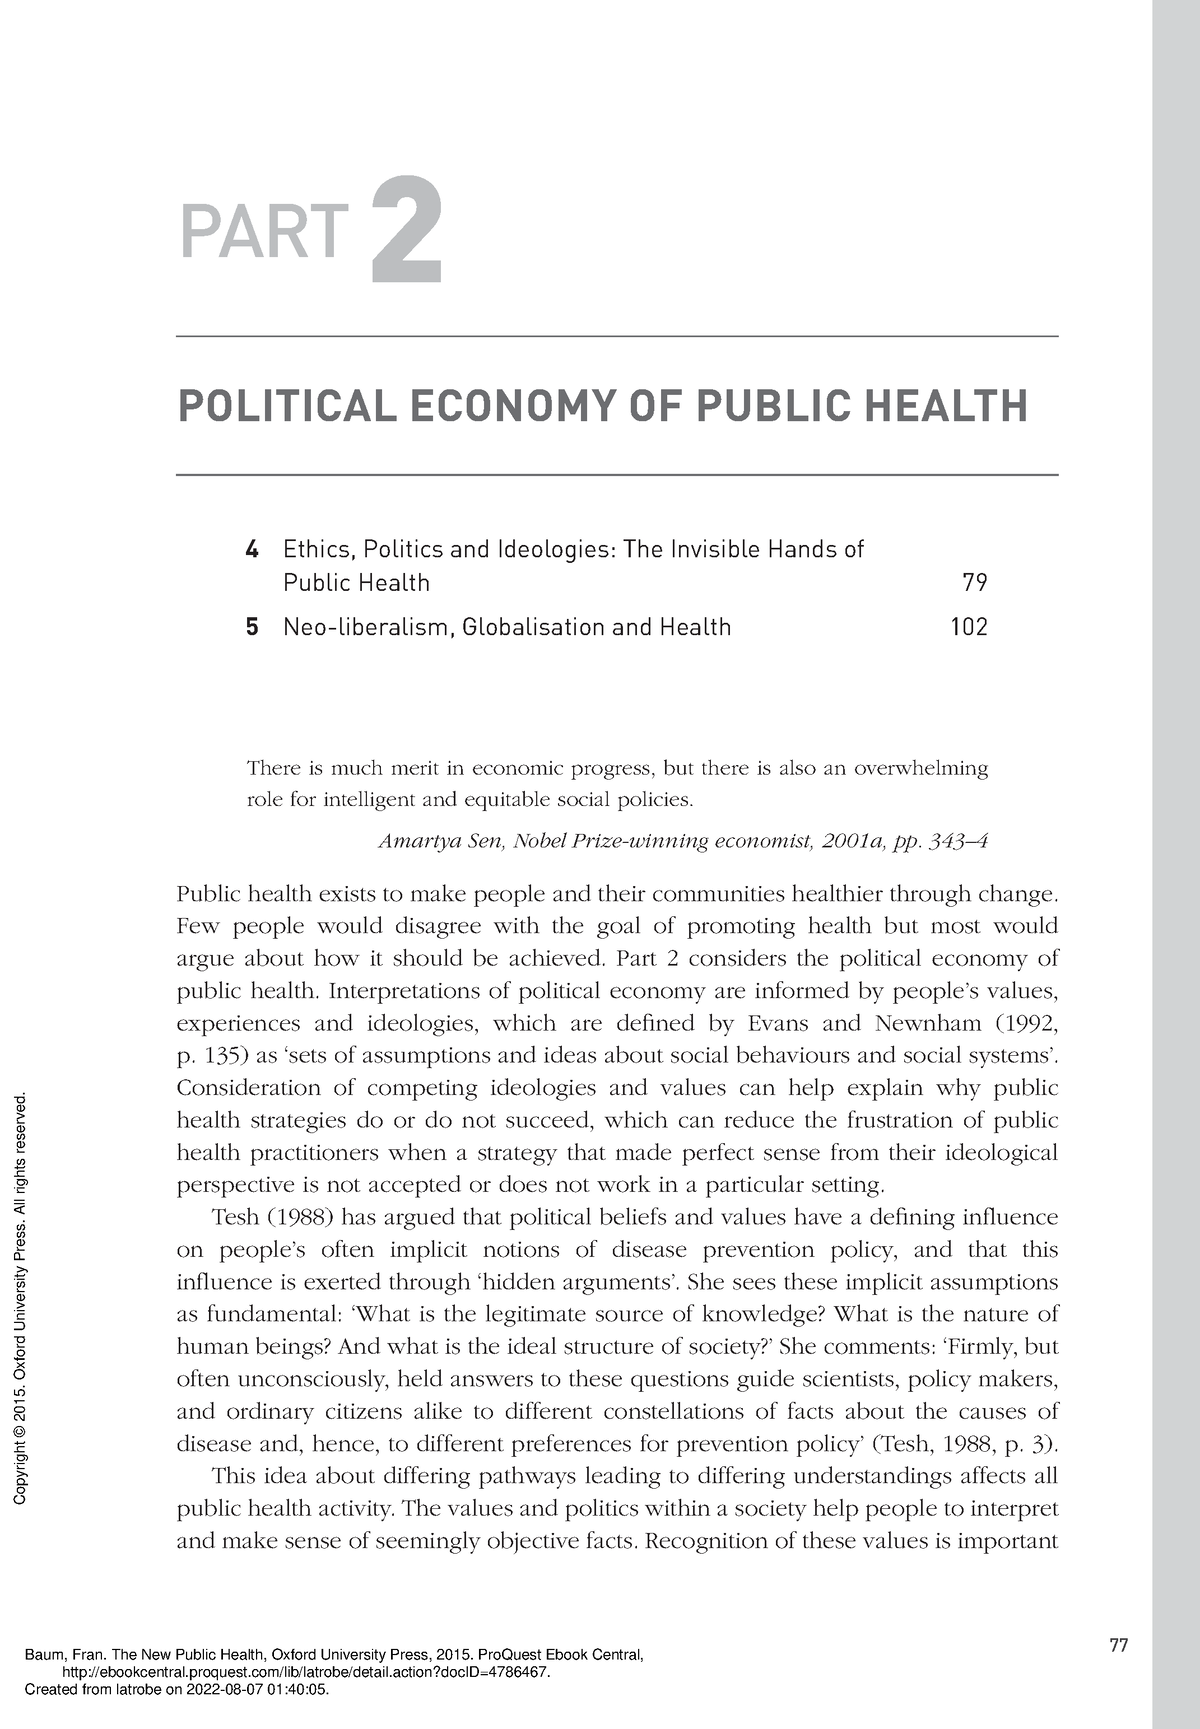 The New Public Health - (PART 2 Political Economy OF Public Health) - 77  PART 2 POLITICAL ECONOMY OF - Studocu